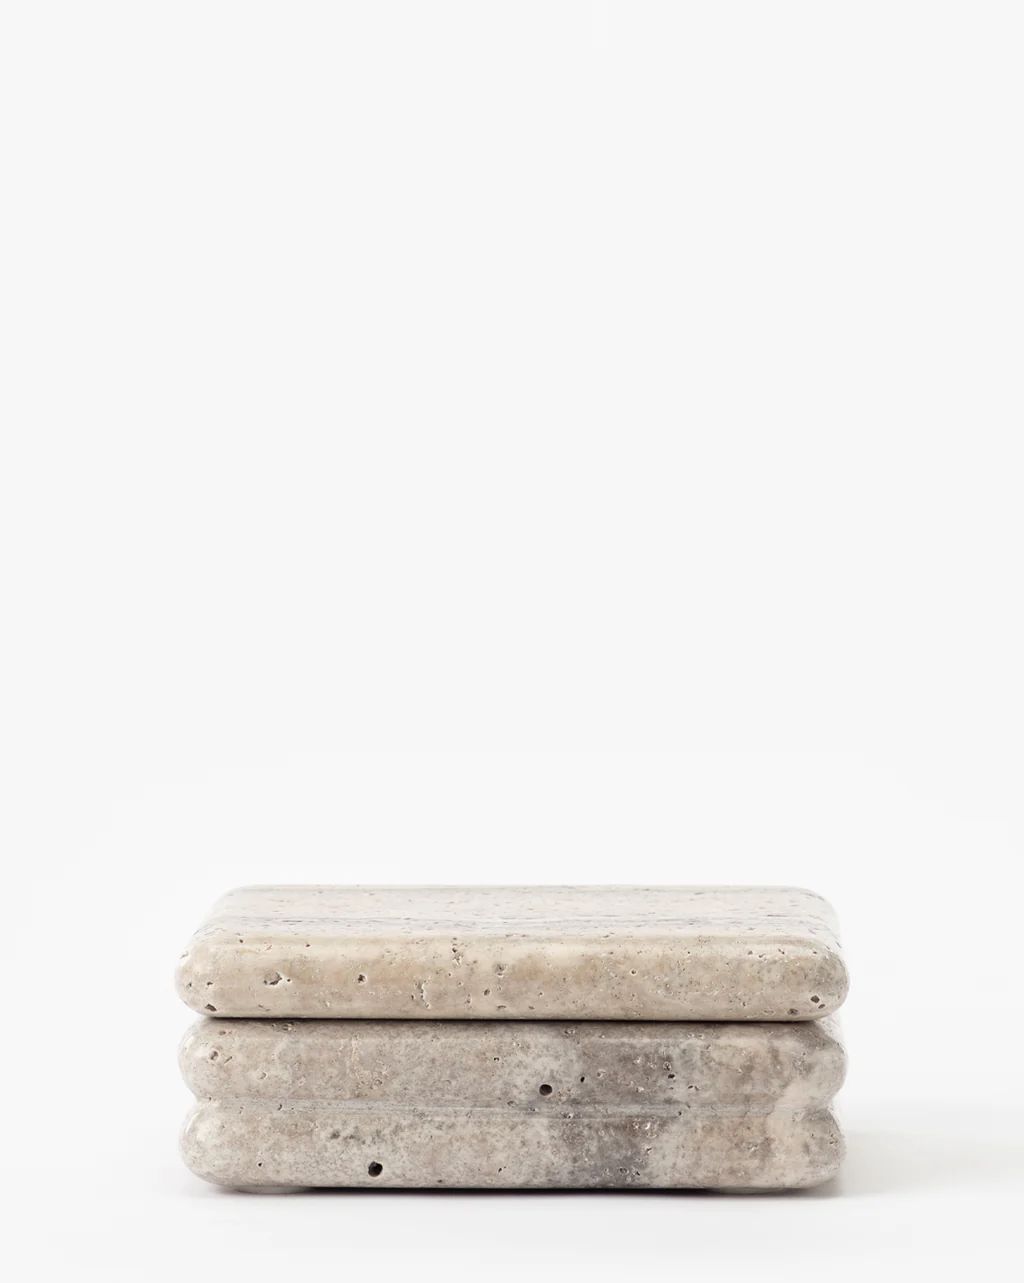 Ives Stone Box | McGee & Co.